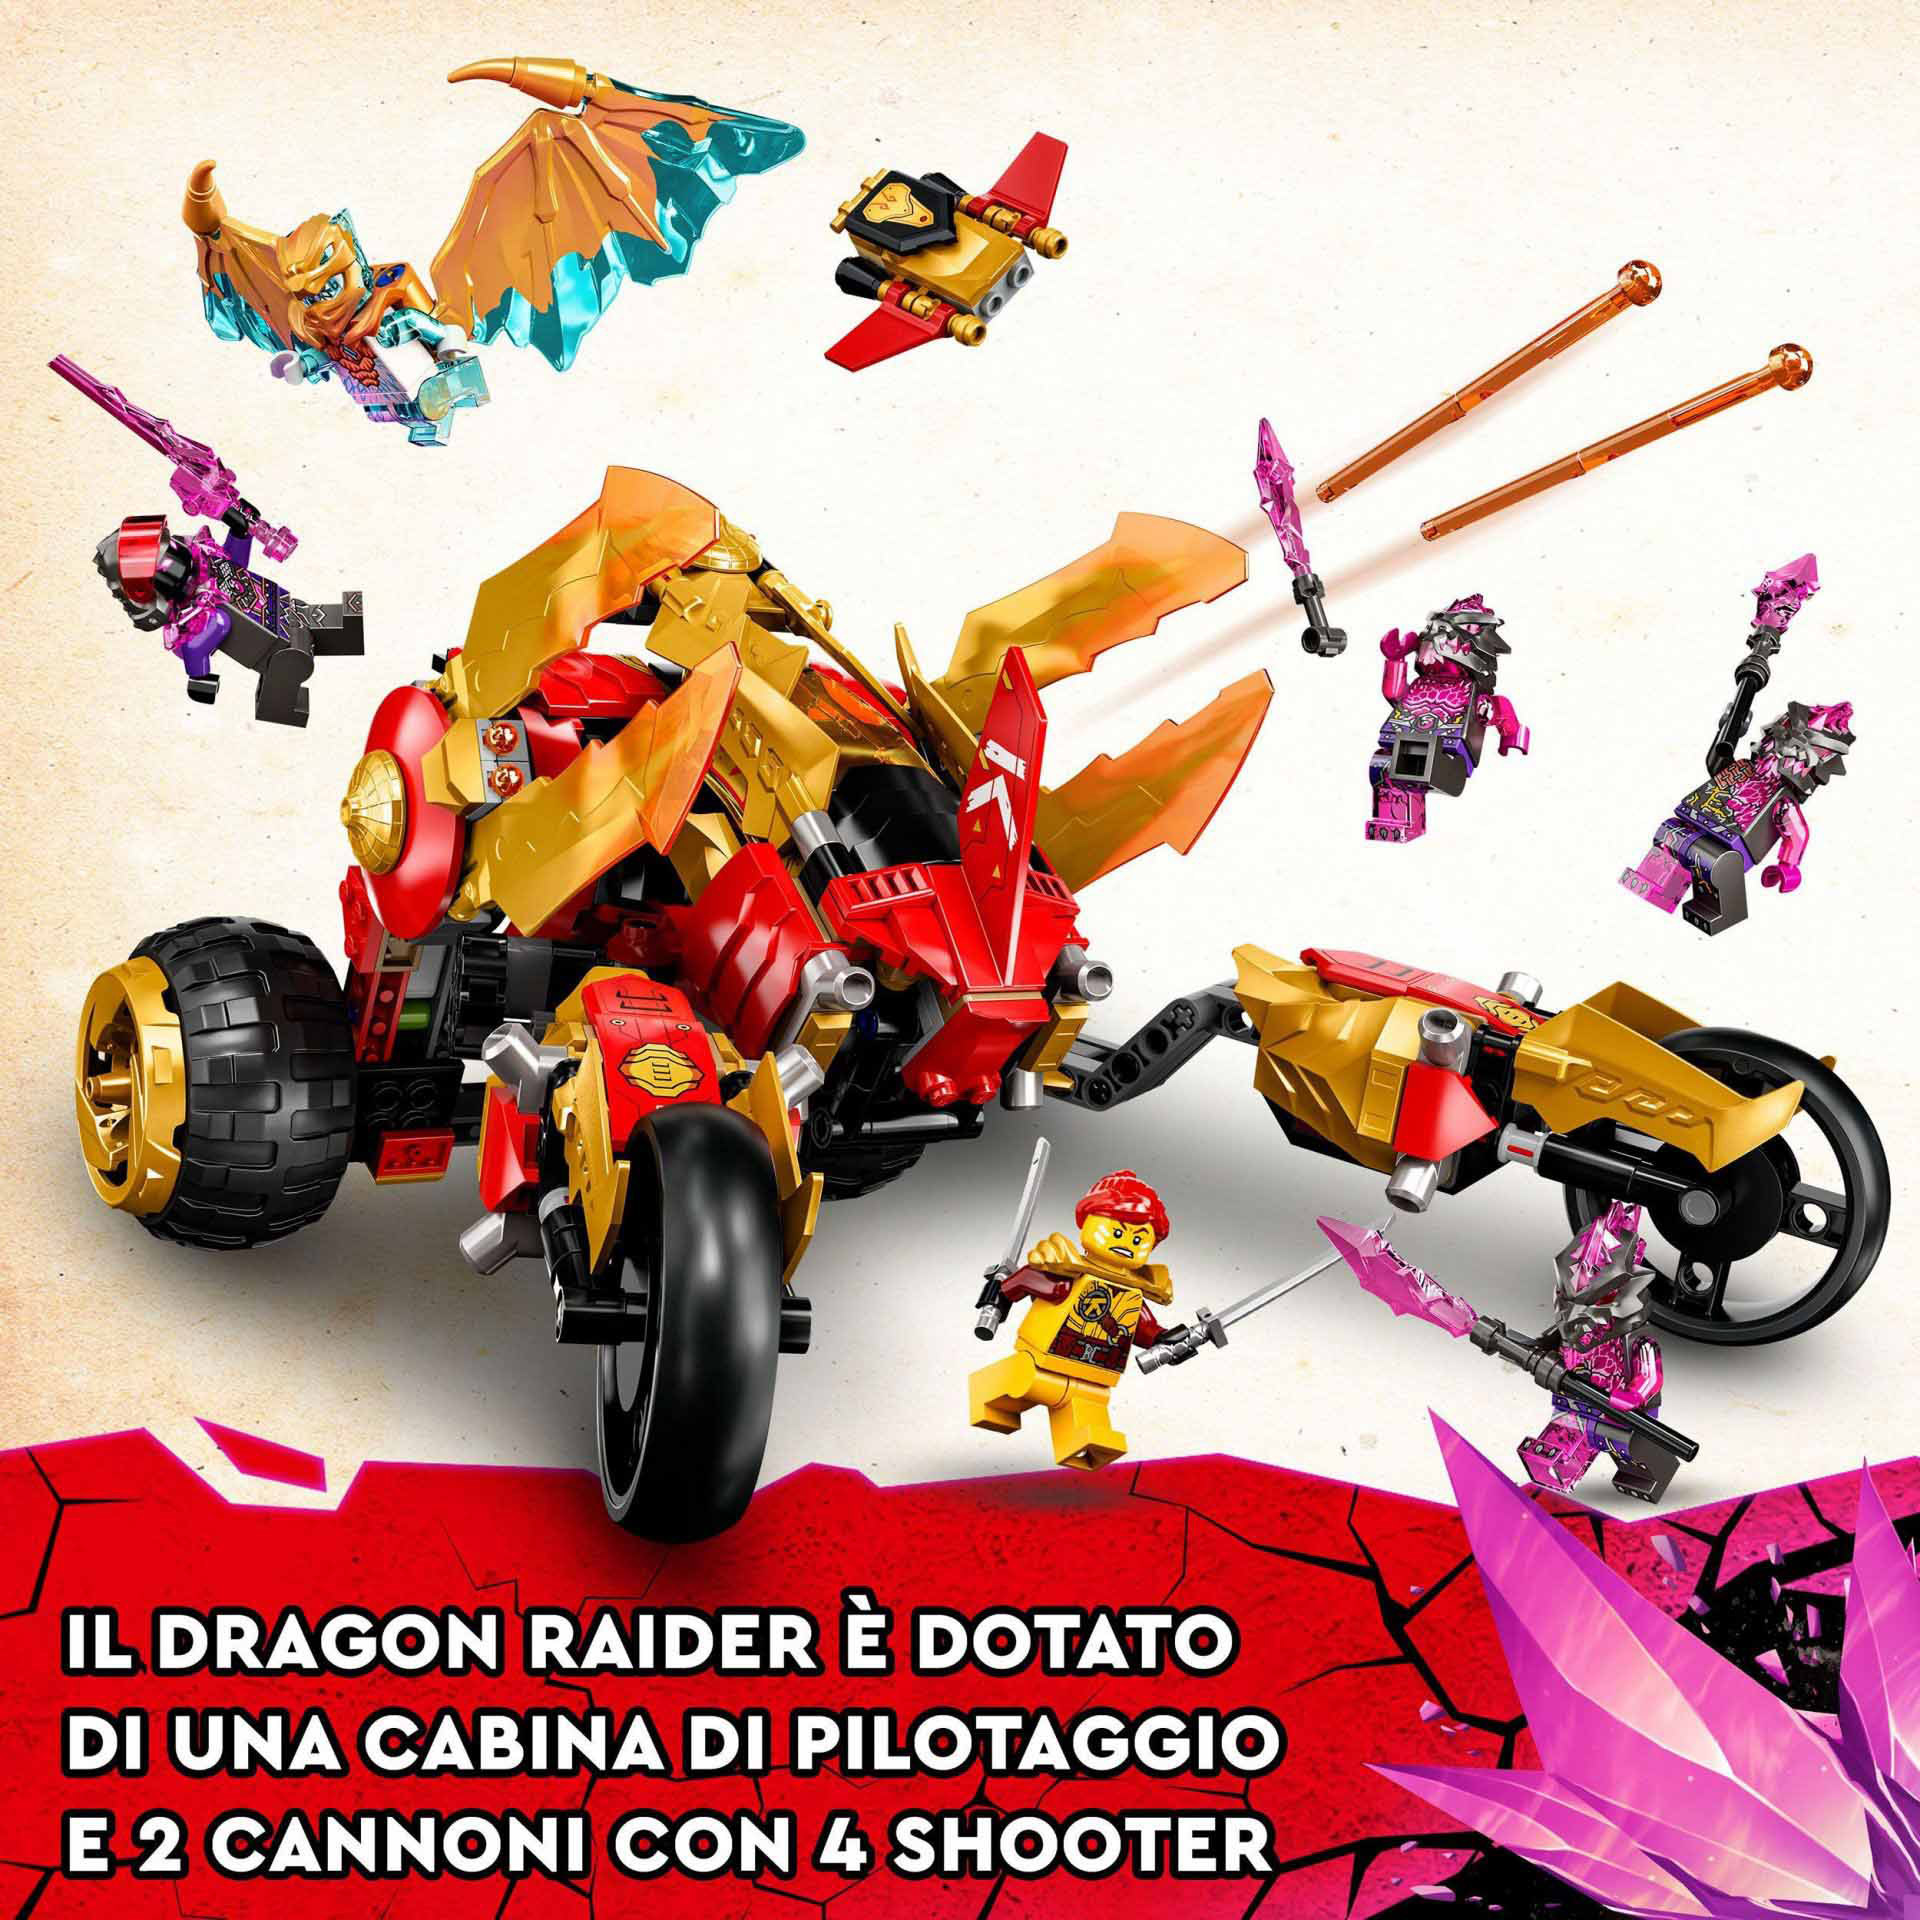 LEGO Ninjago Raider-Drago d'Oro di Kai, Set Serie TV Crystallized con Minifigur 71773, , large